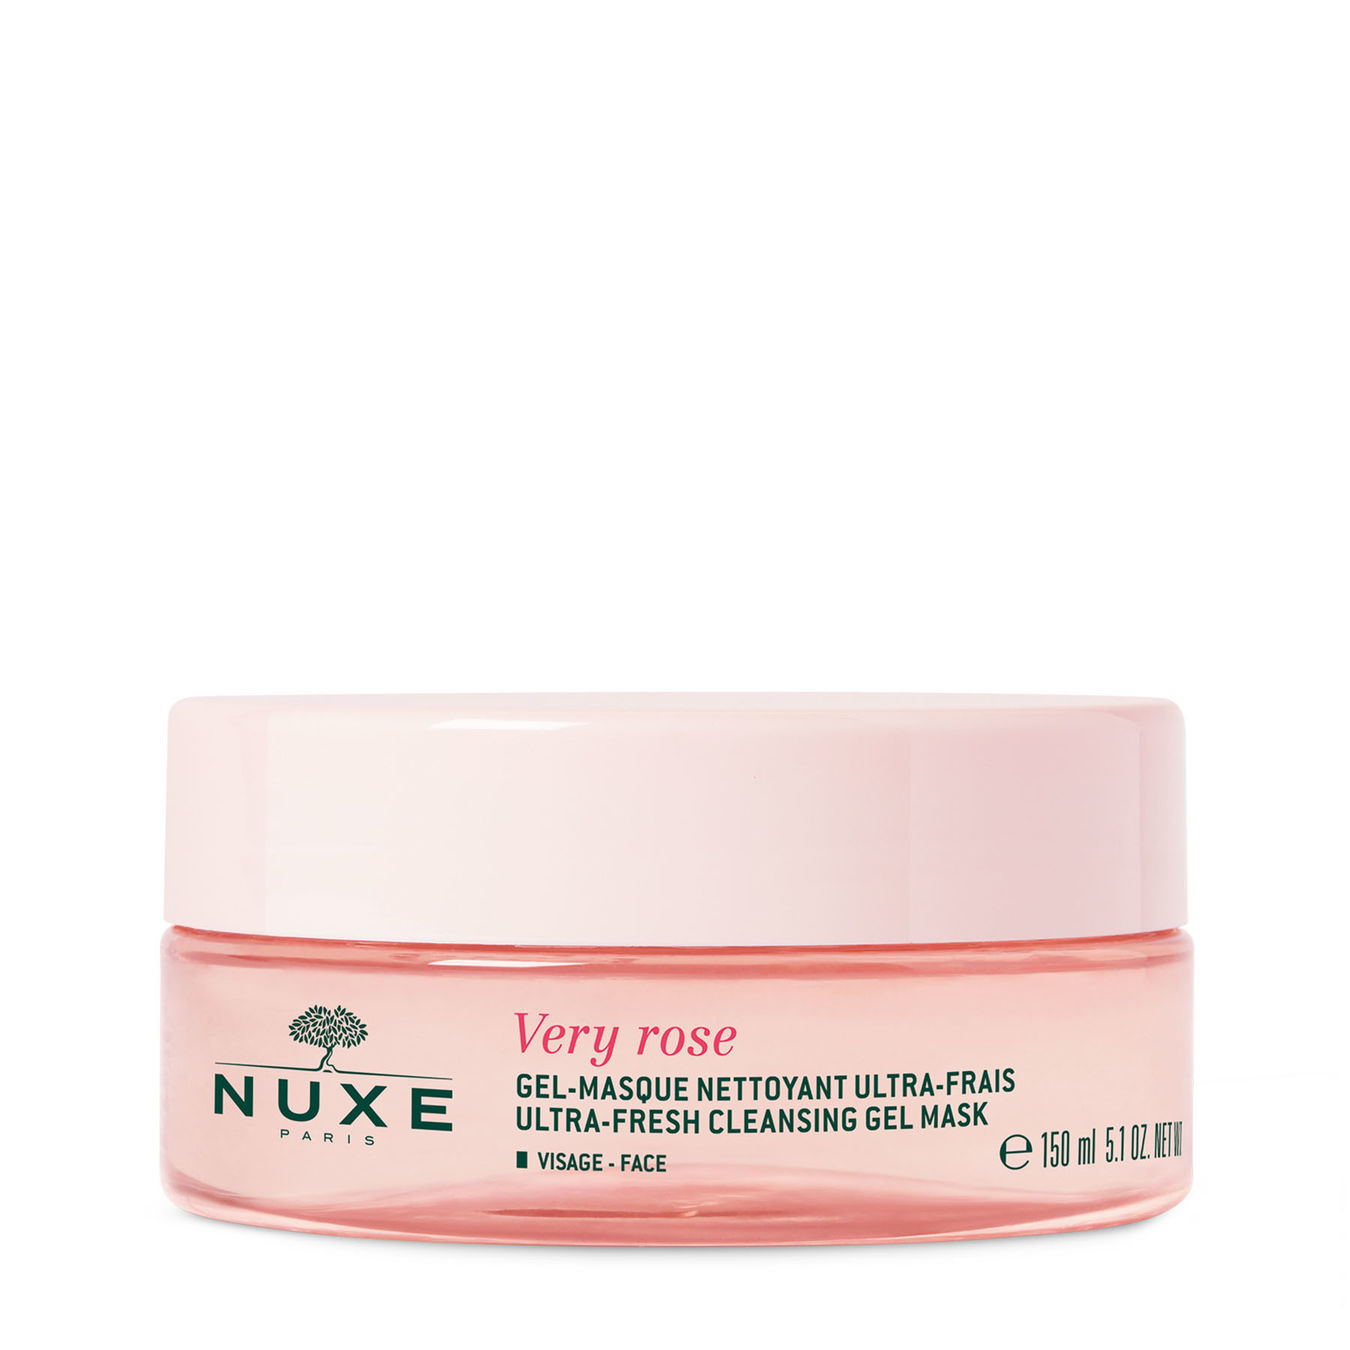 NUXE Very Rose Gel-Masque Nettoyant Ultra-frais von Nuxe